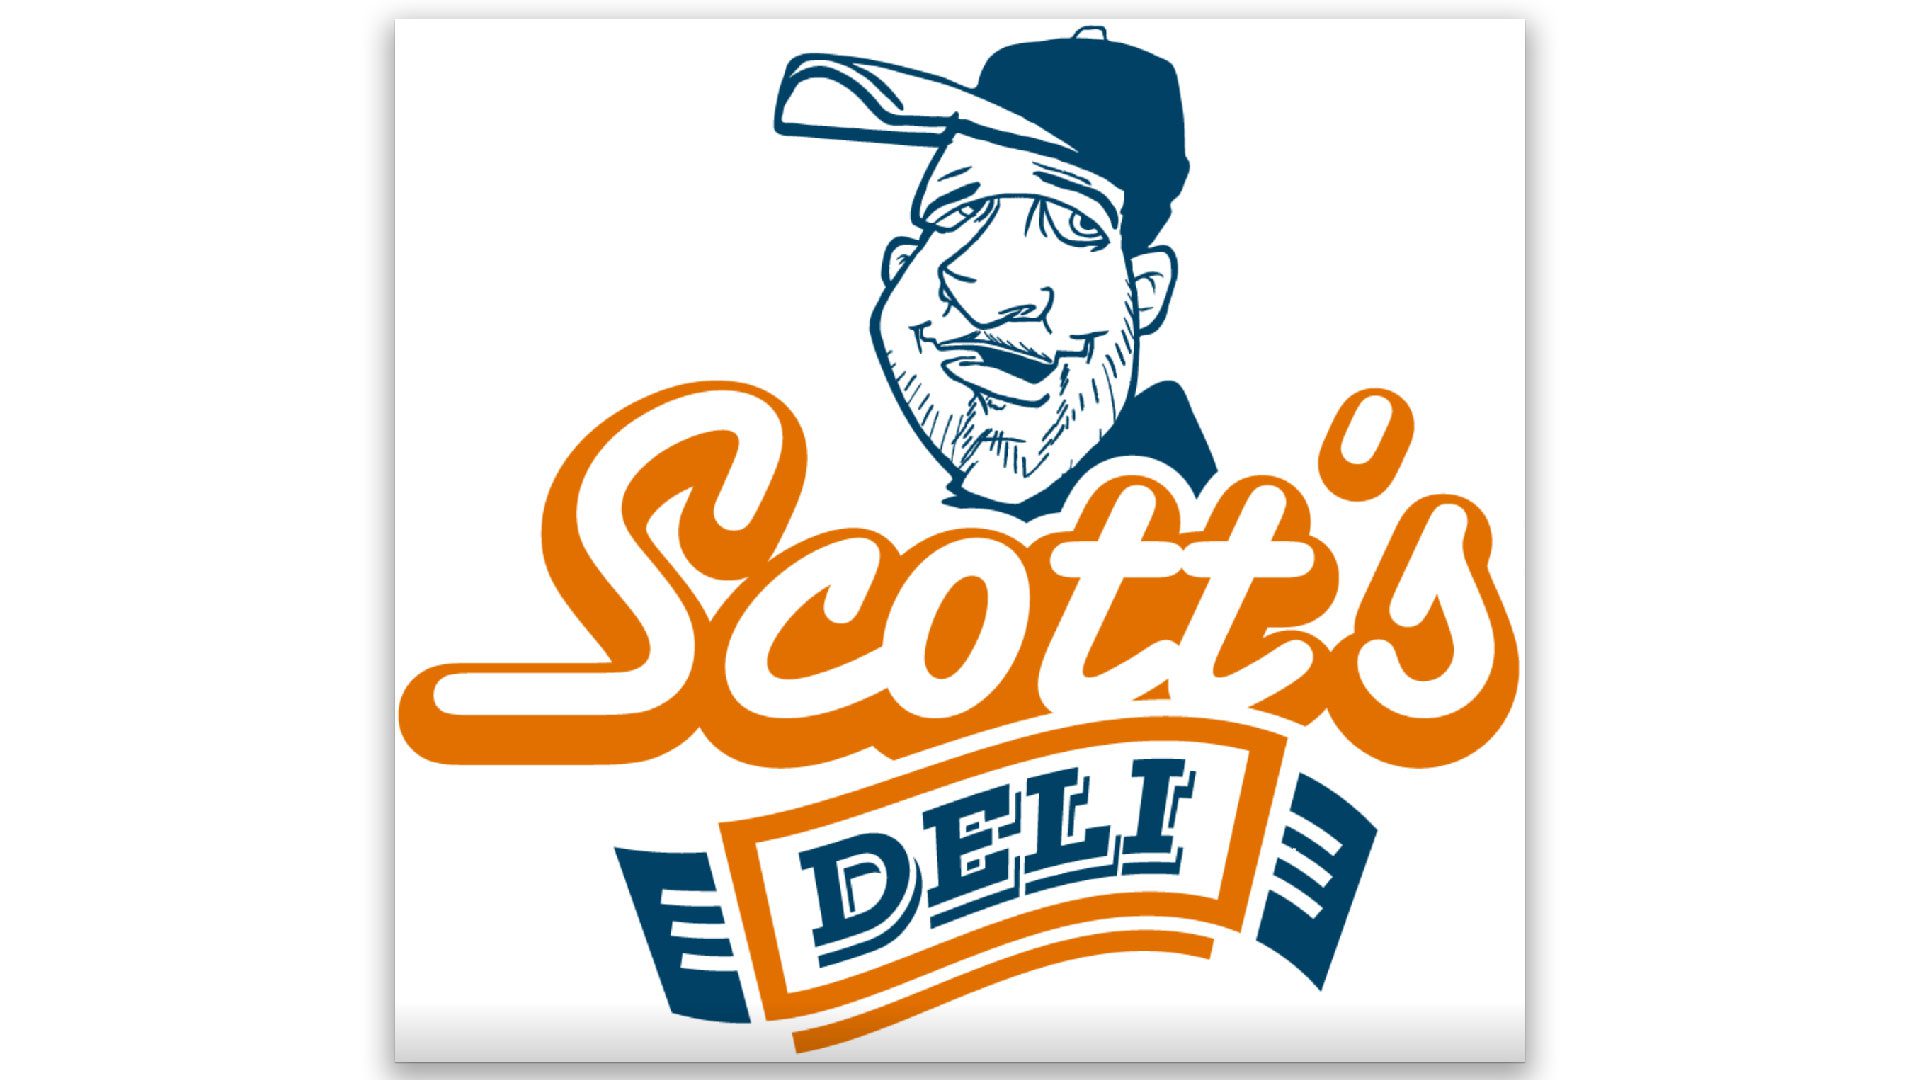 Motorworks Brewing presents Scott's Delli Food Truck logo